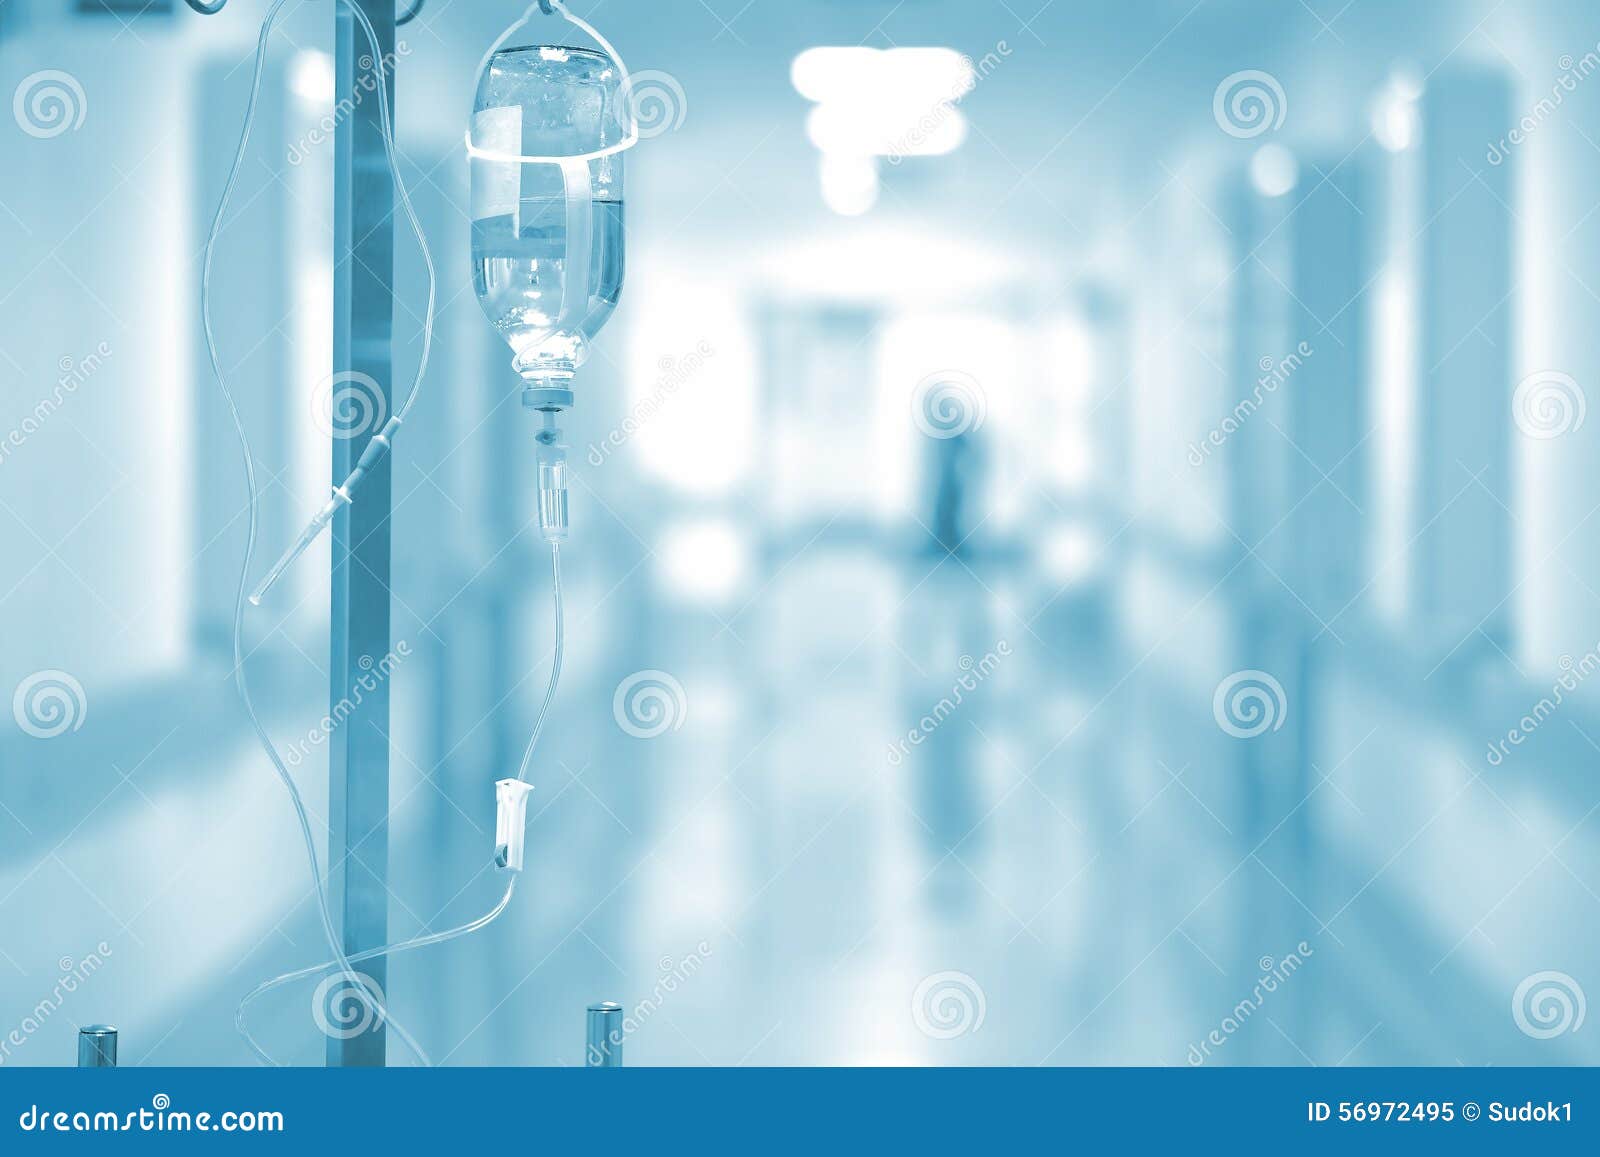 medical-drip-background-hospital-corridor-blurred-56972495.jpg